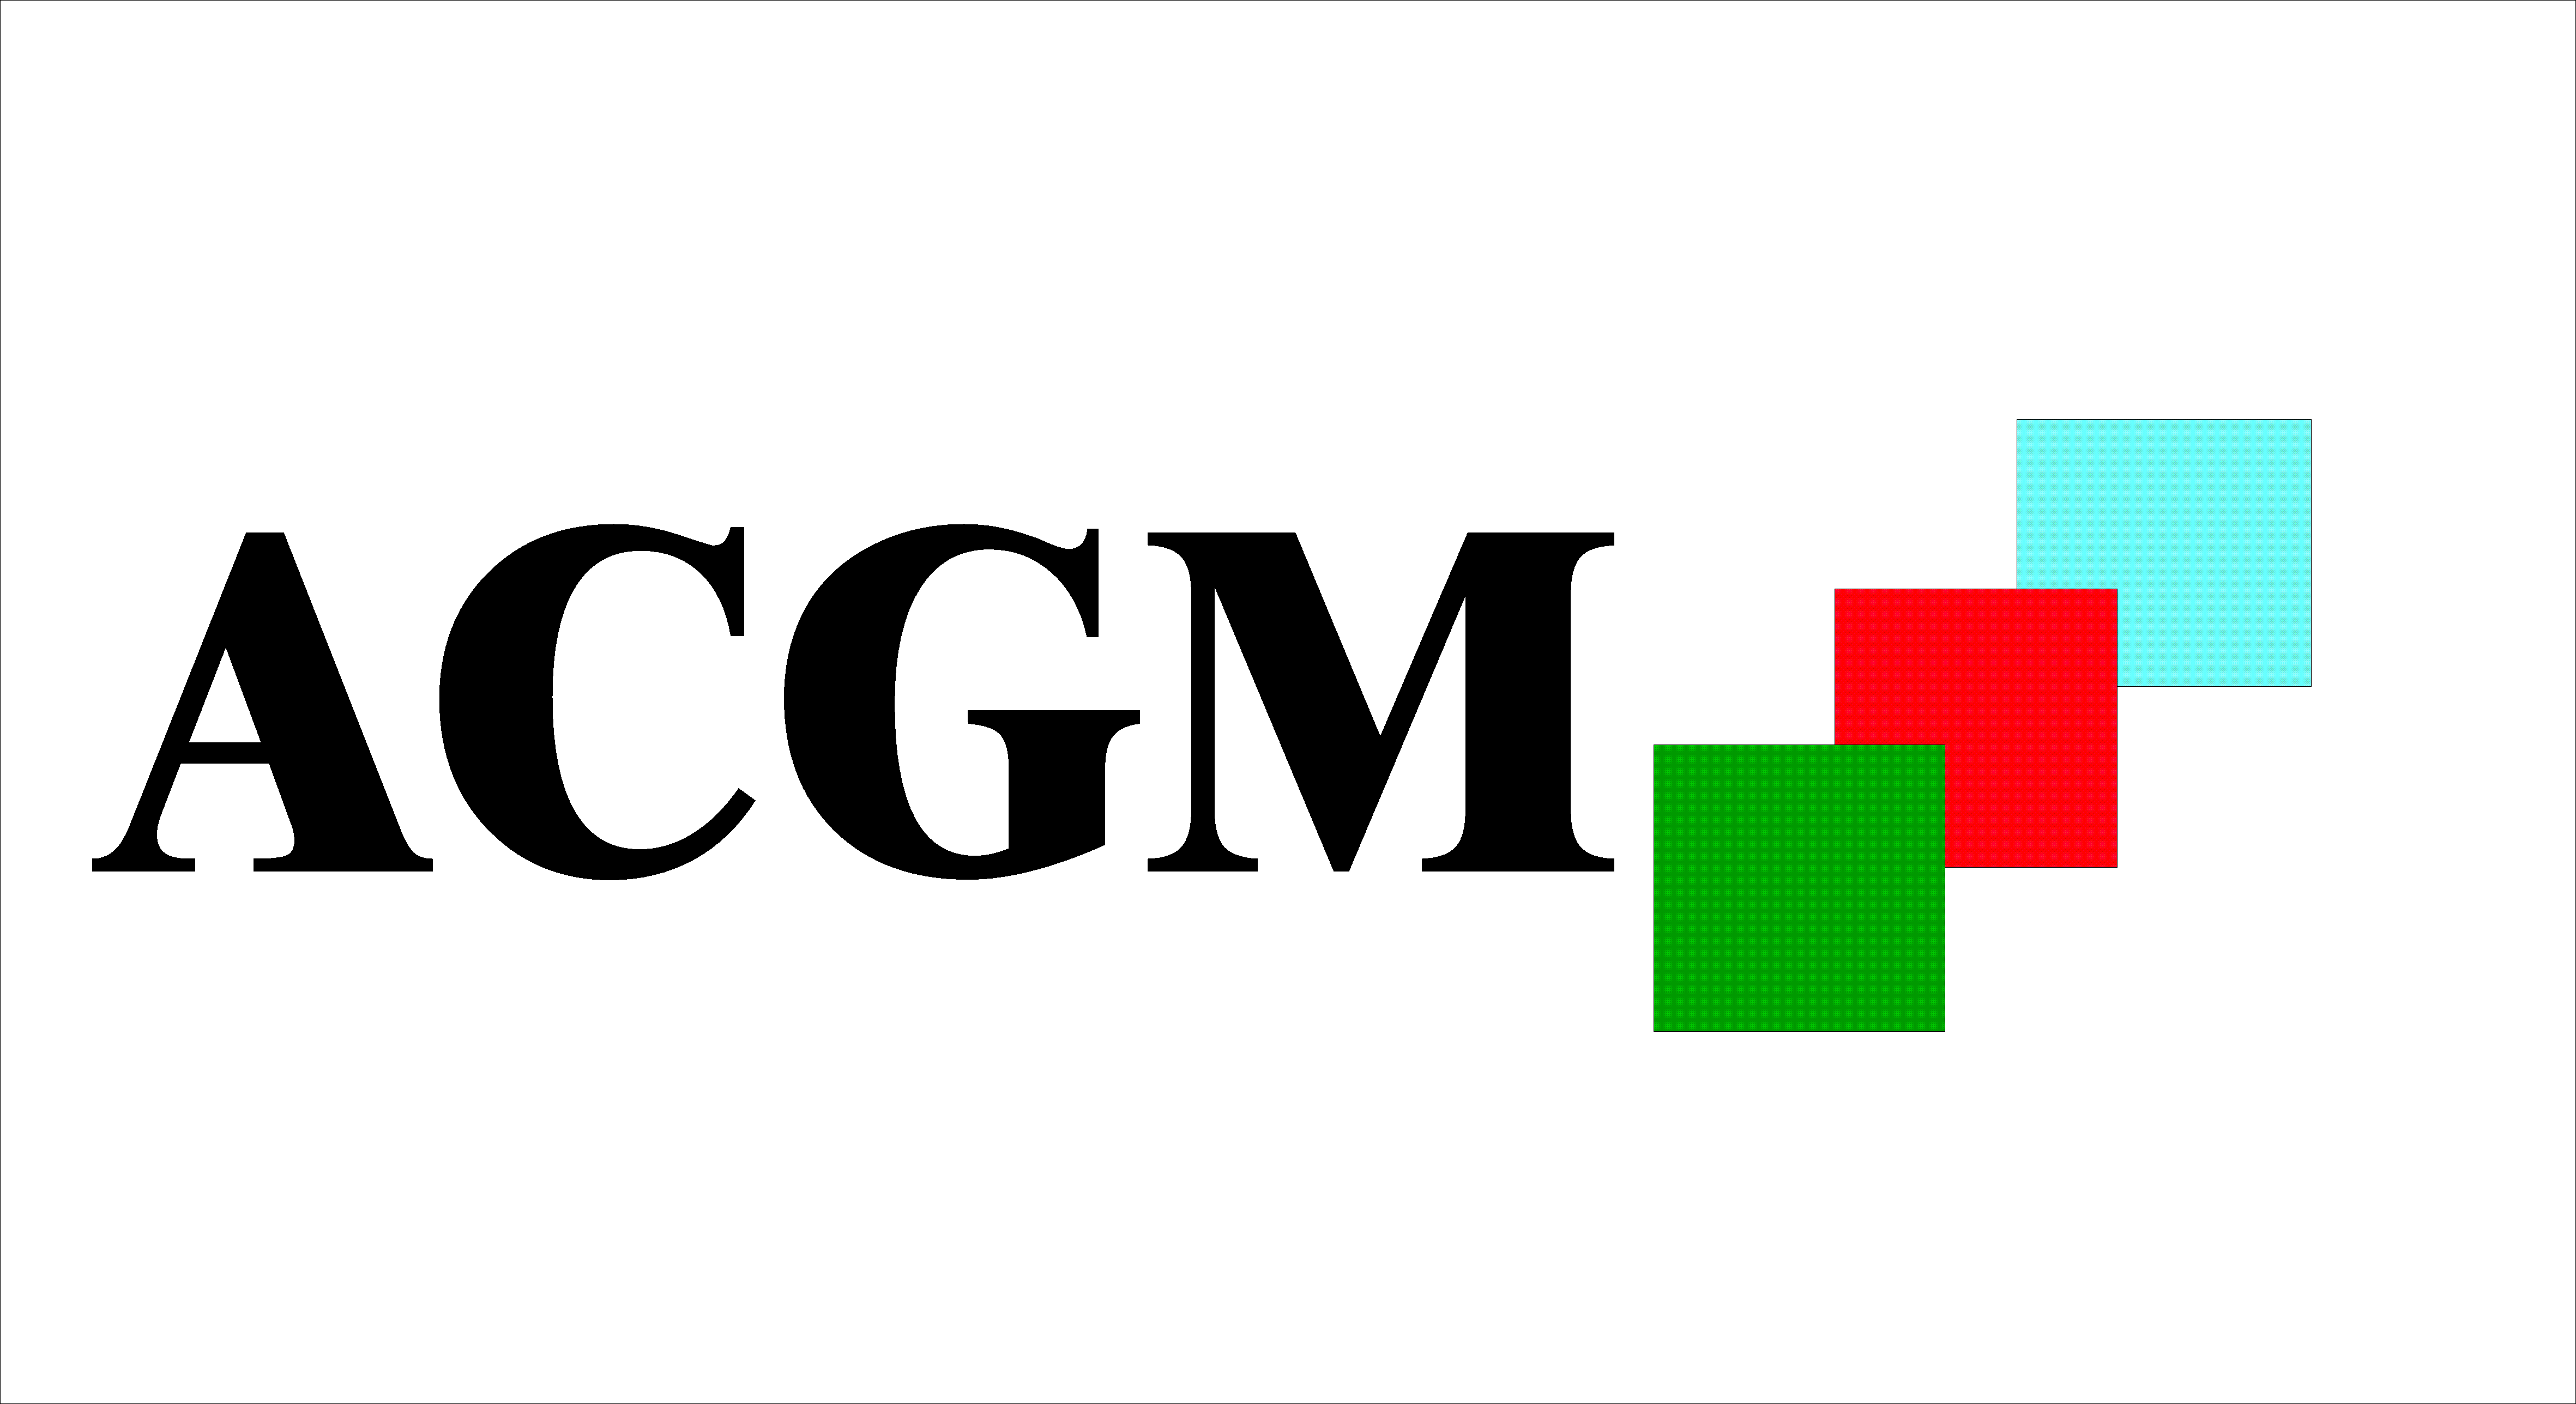 ACGM сервис